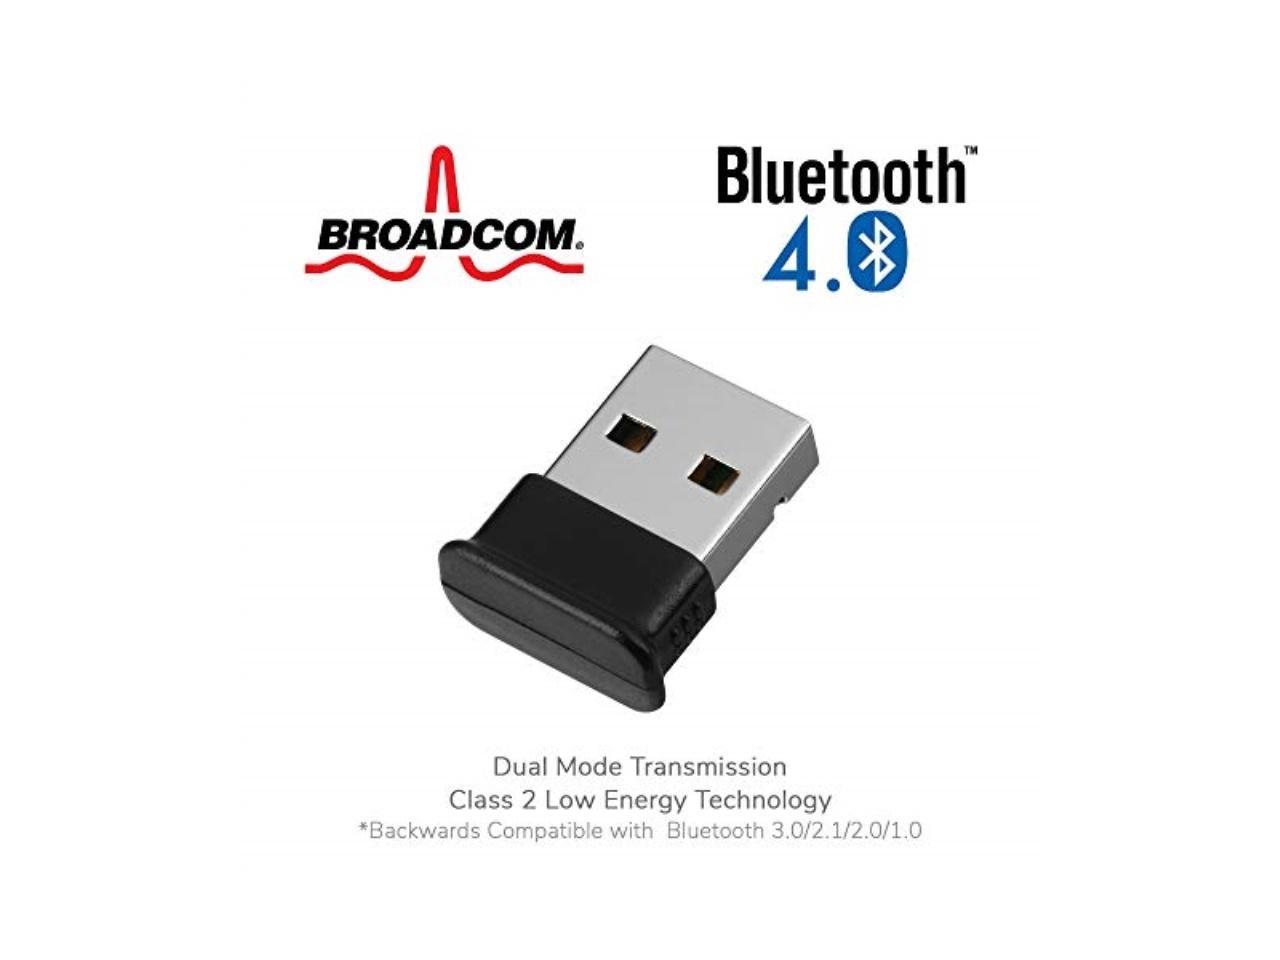 GMYLE® Ultra-Mini USB Broadcom BCM20702 Class 2 Bluetooth V4.0 Dual Mode Dongle Wireless Adapter with LED Bluetooth Adapter Dongle 